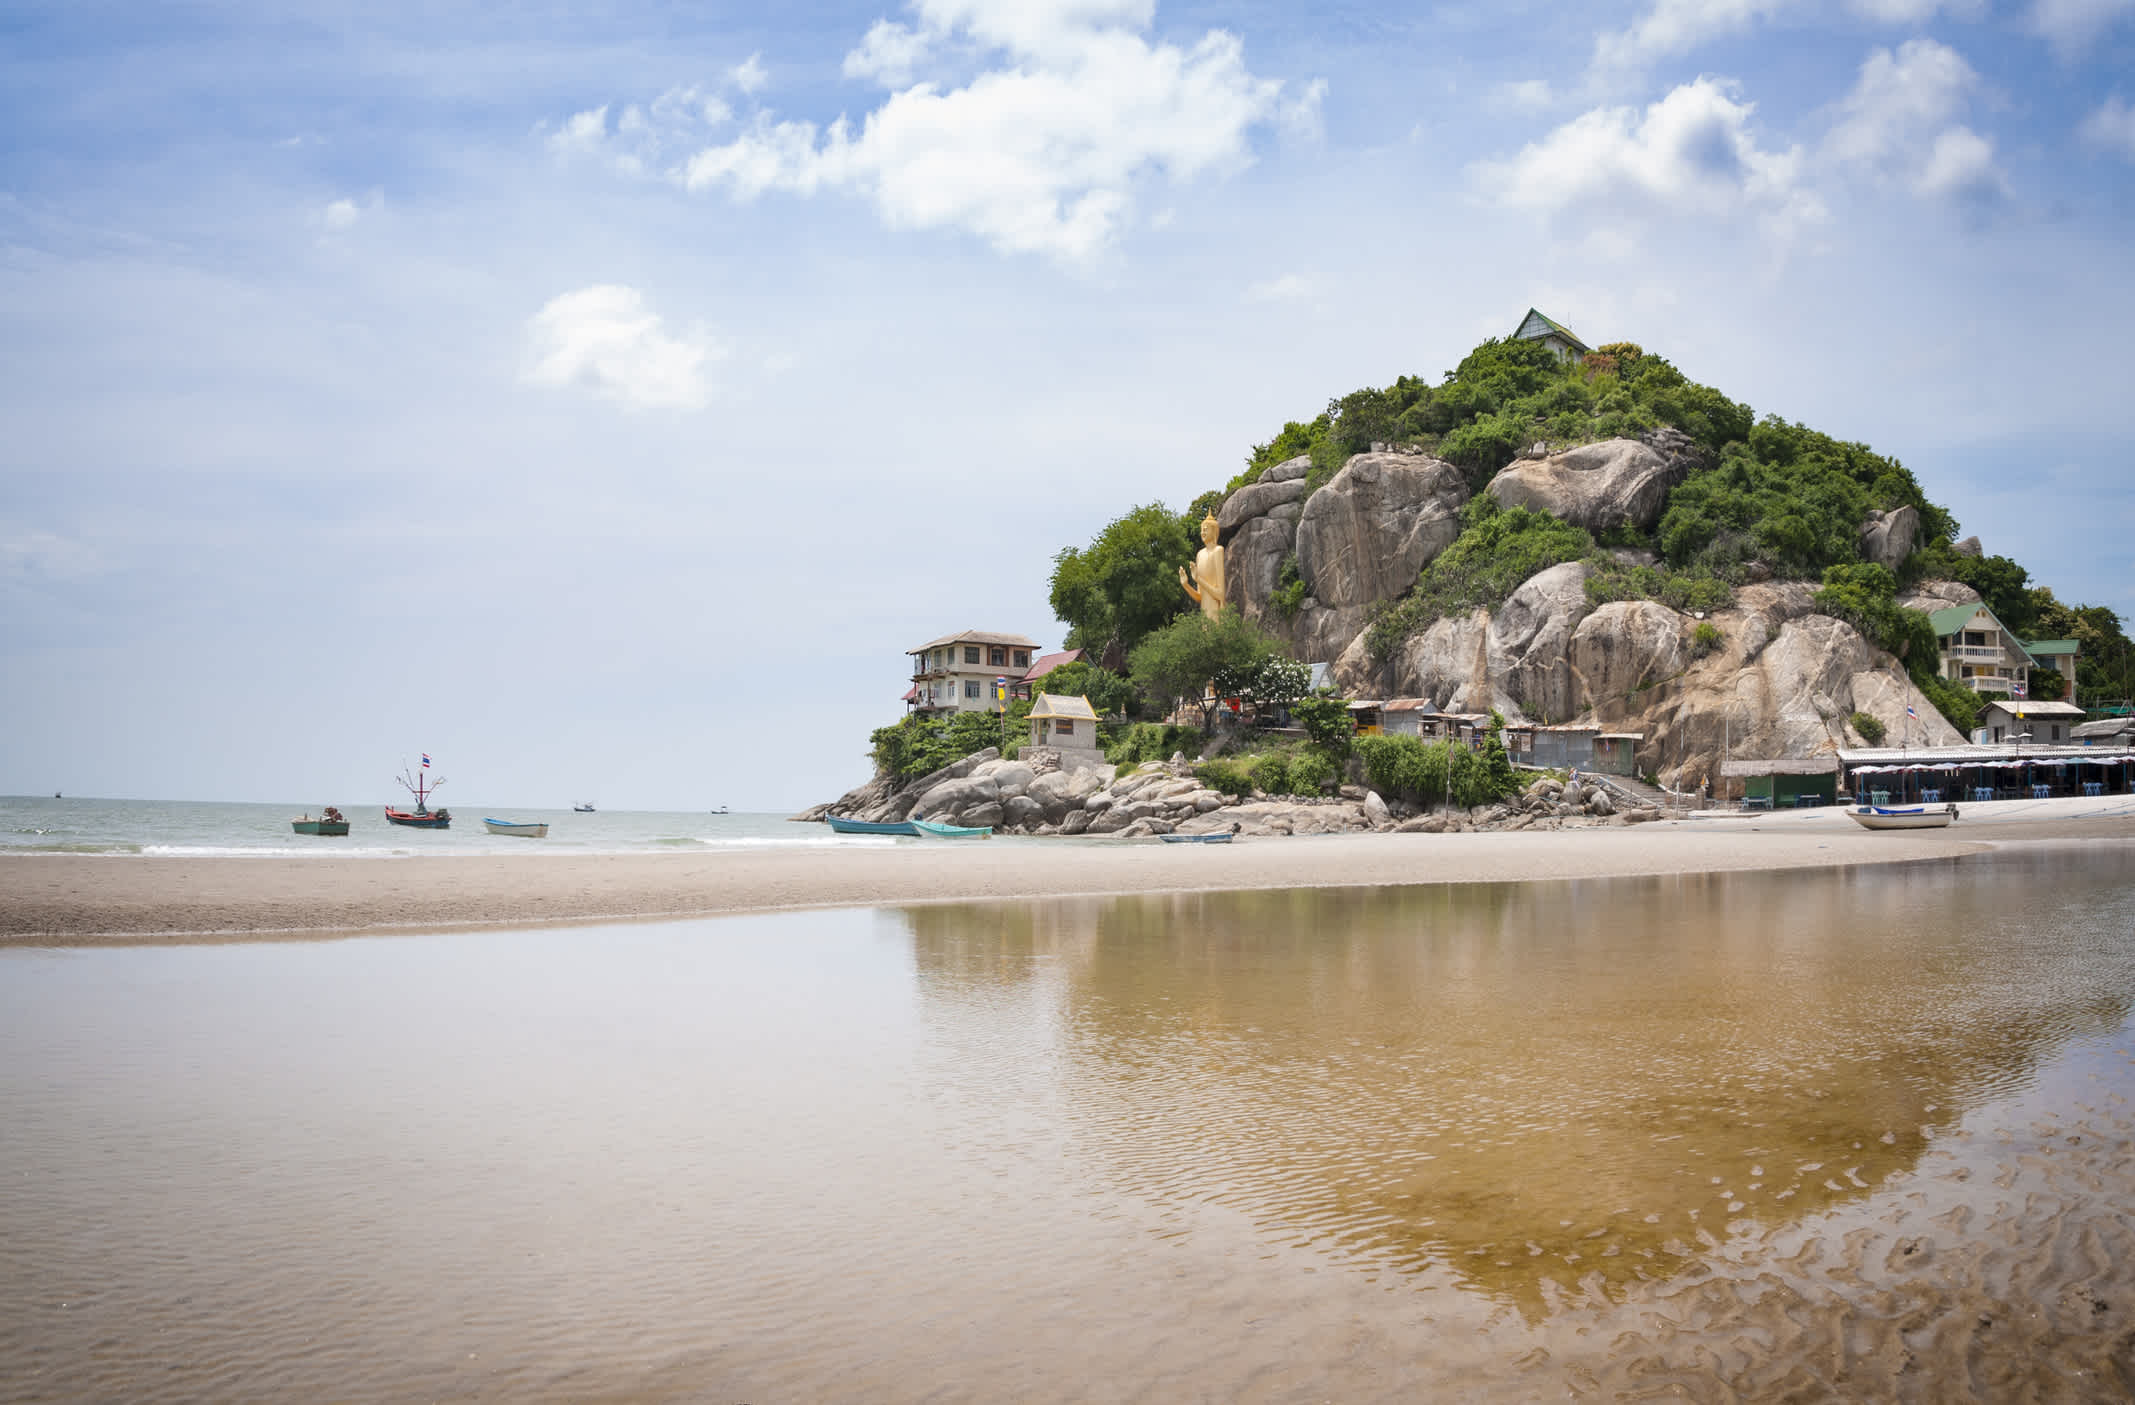 La plage de Hua Hin avec une grande statue dorée de Bouddha debout en arrière-plan, Hua Hin en Thaïlande